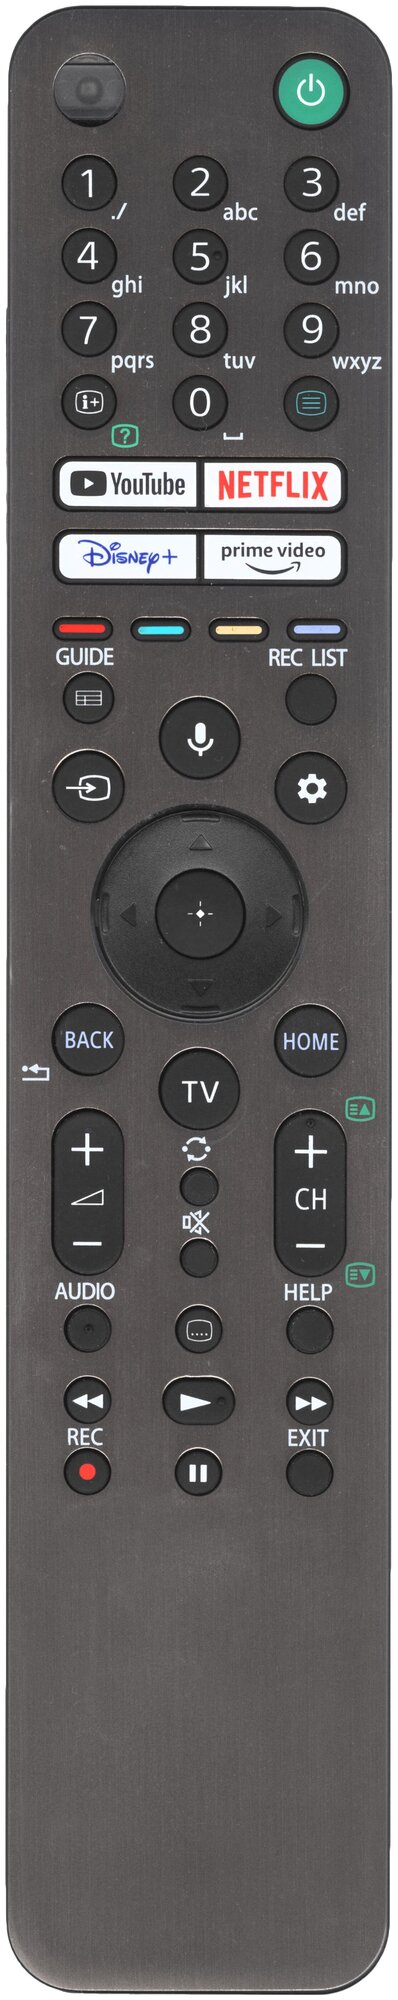 Голосовой пульт RMF-TX621E для Smart телевизоров SONY / сони